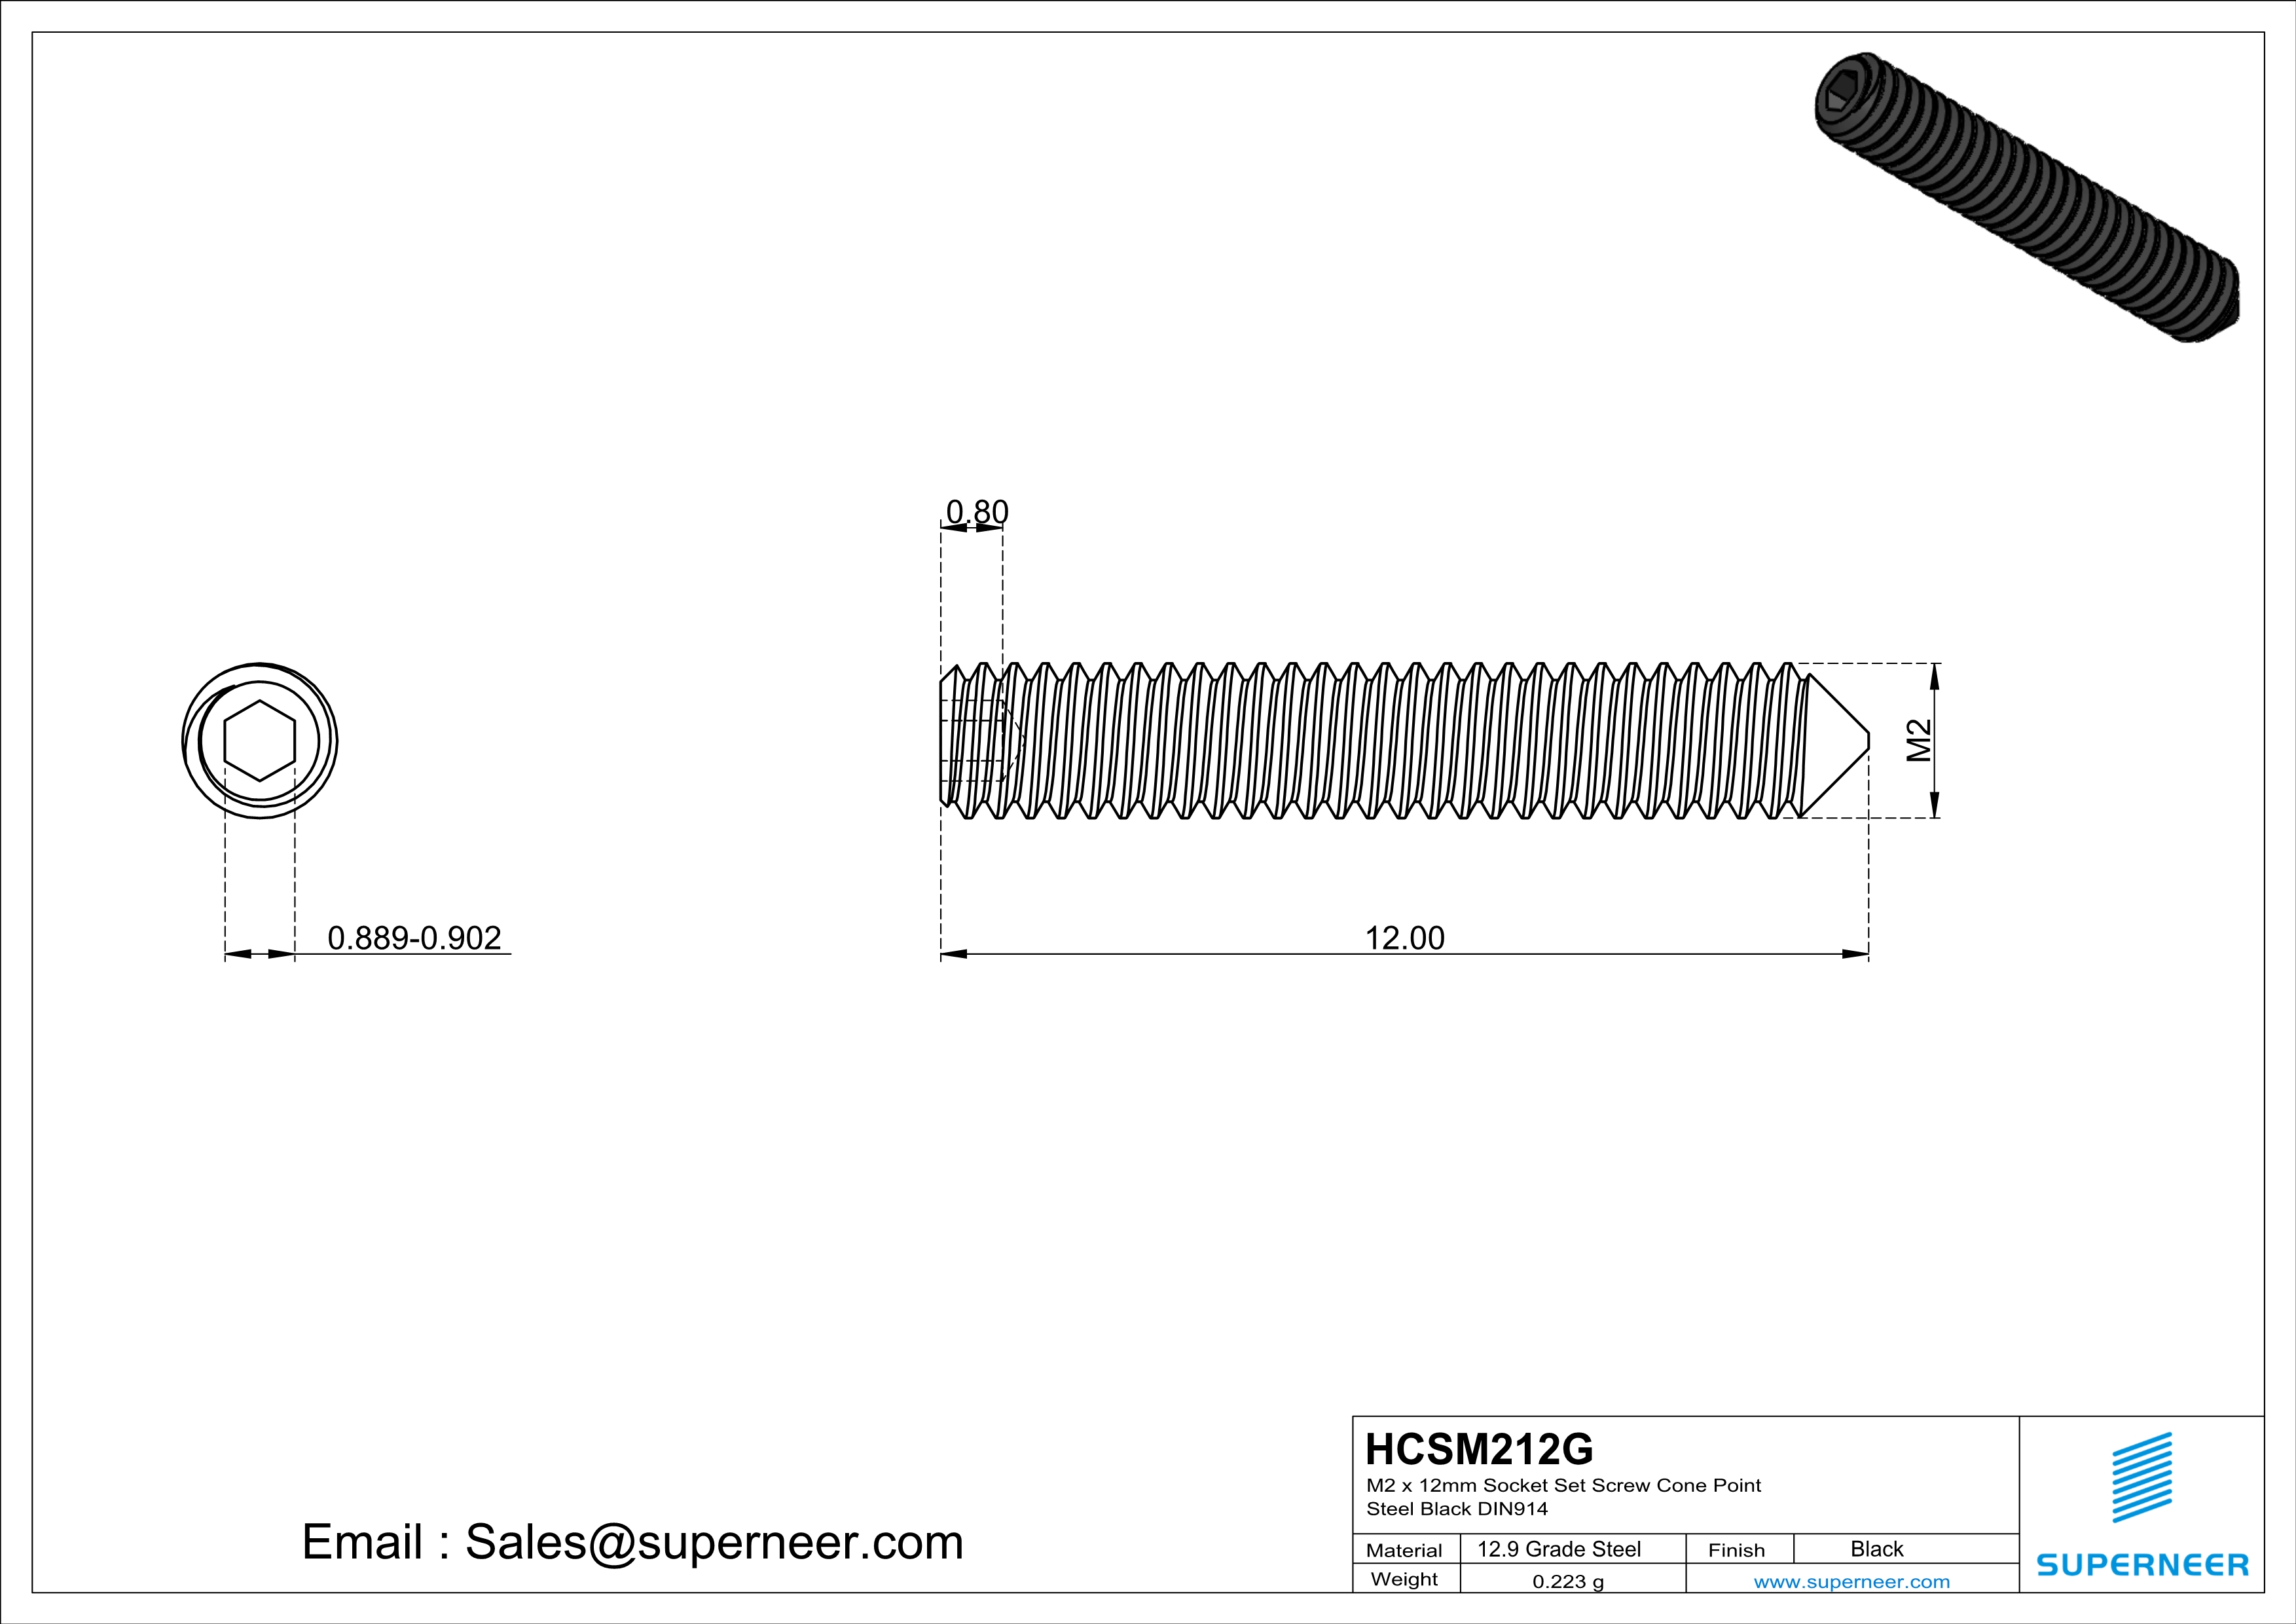 M2 x 12mm Socket Set Screw Cone Point 12.9 Carbon Steel Black DIN914